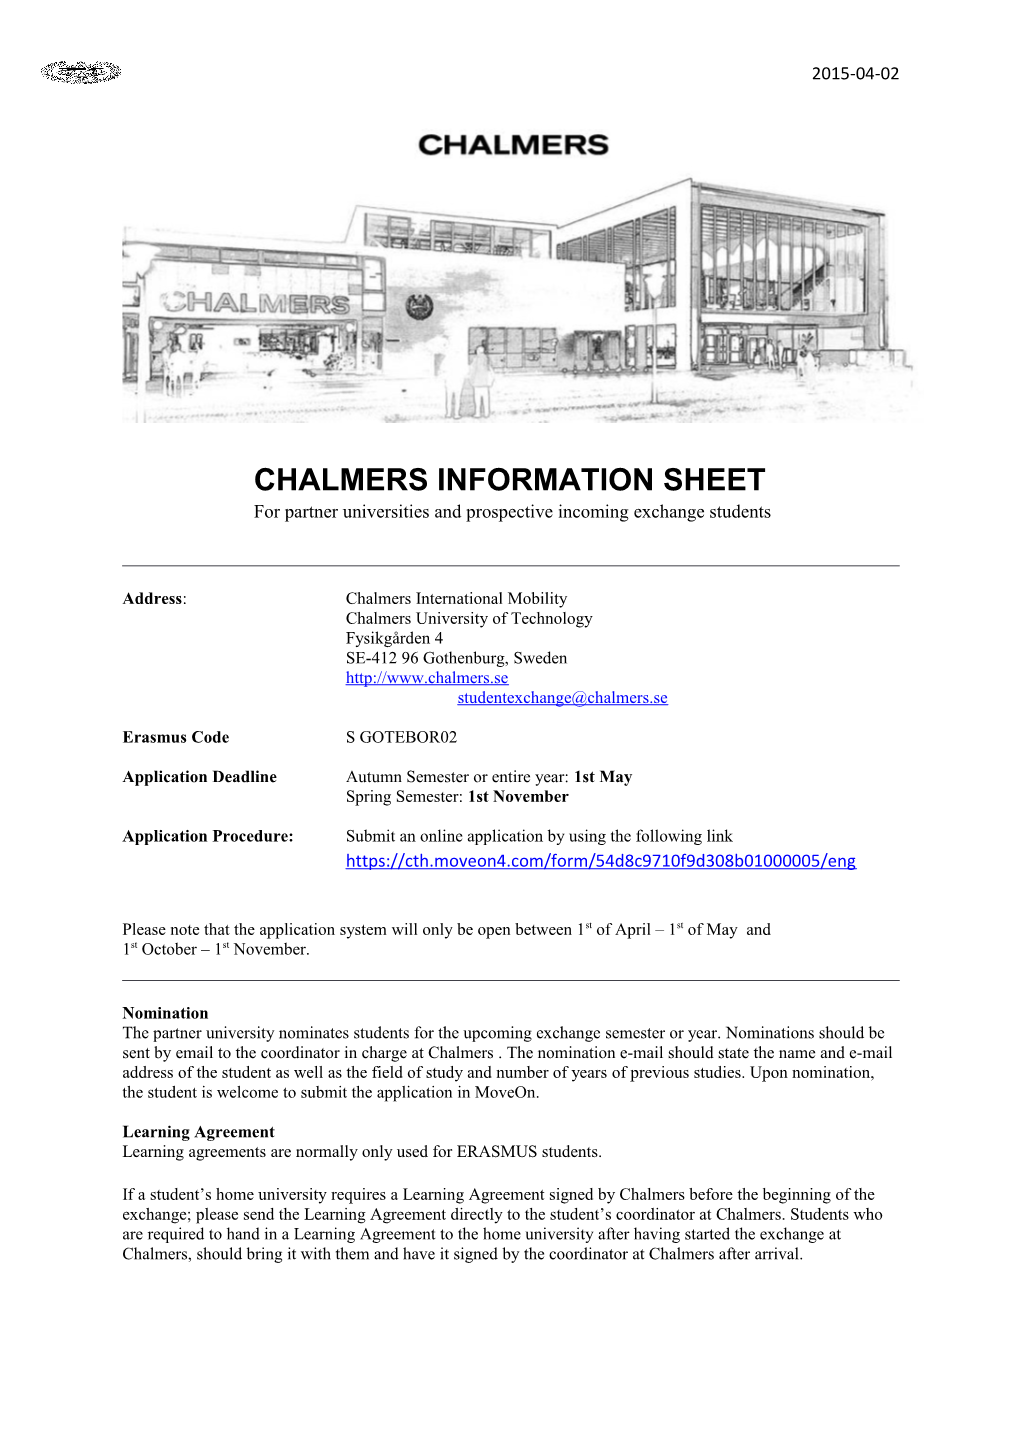 Address: Chalmers International Mobility